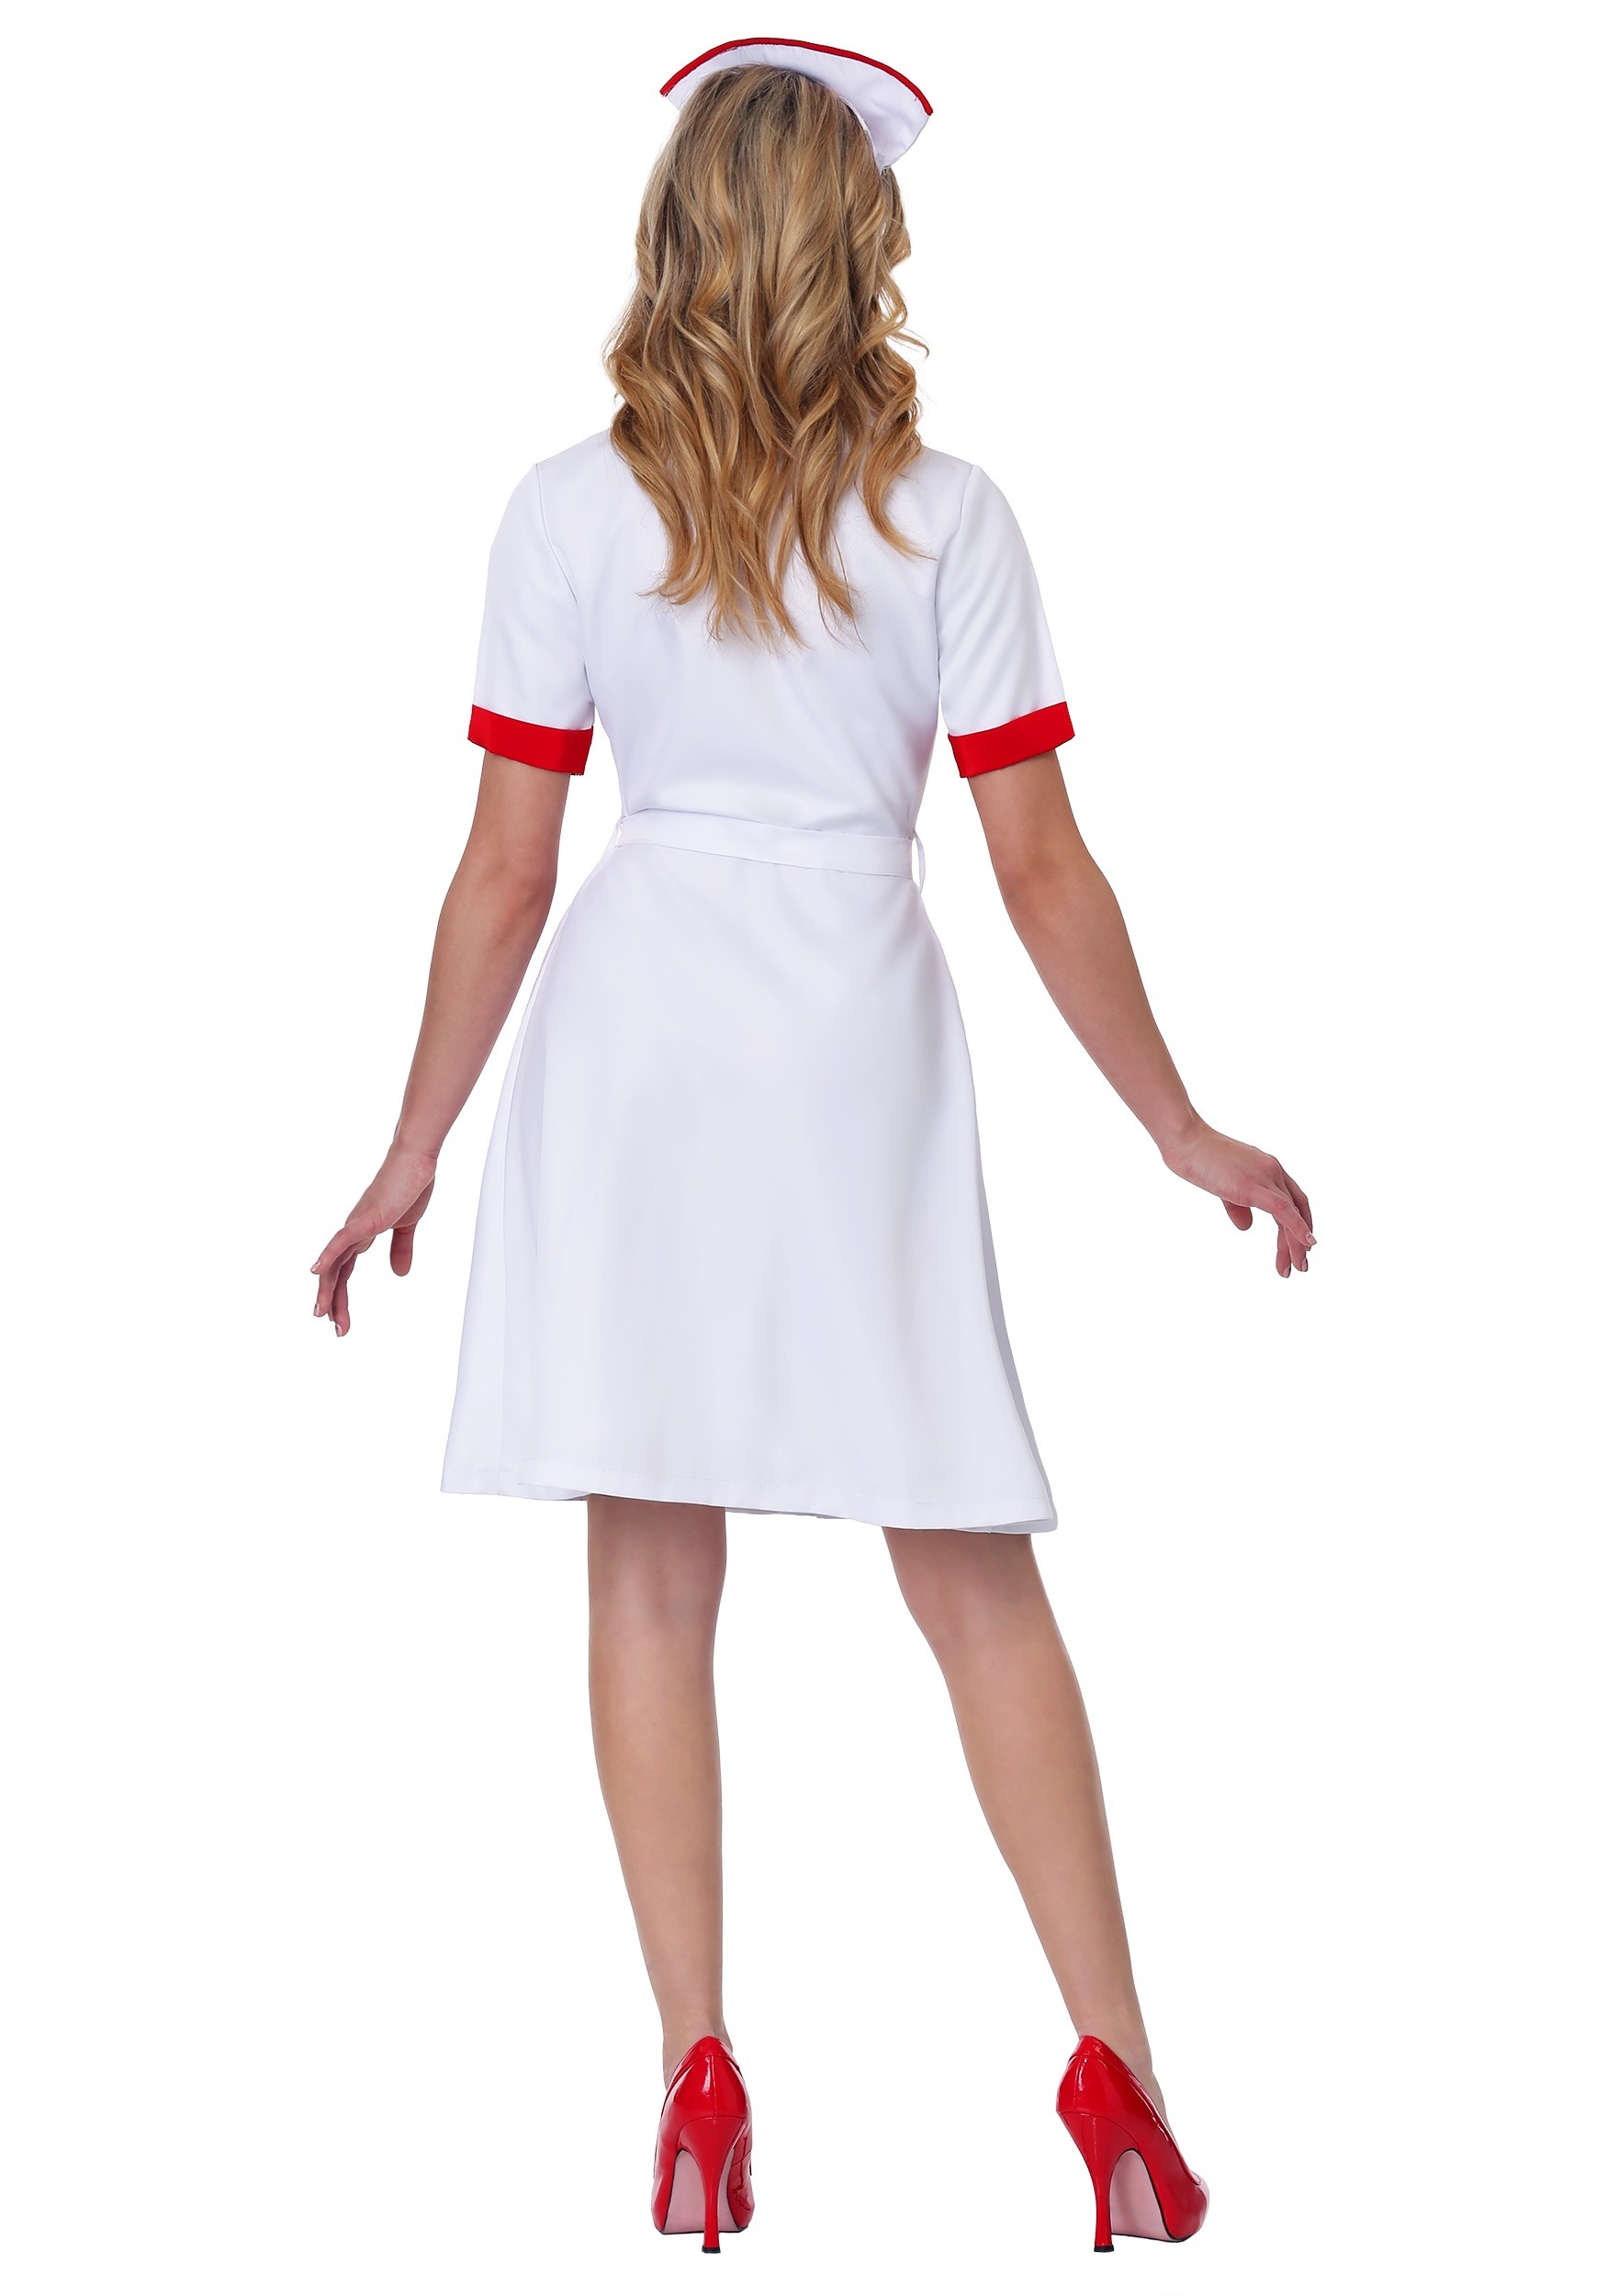 Stitch Me Up Nurse Costume For Women